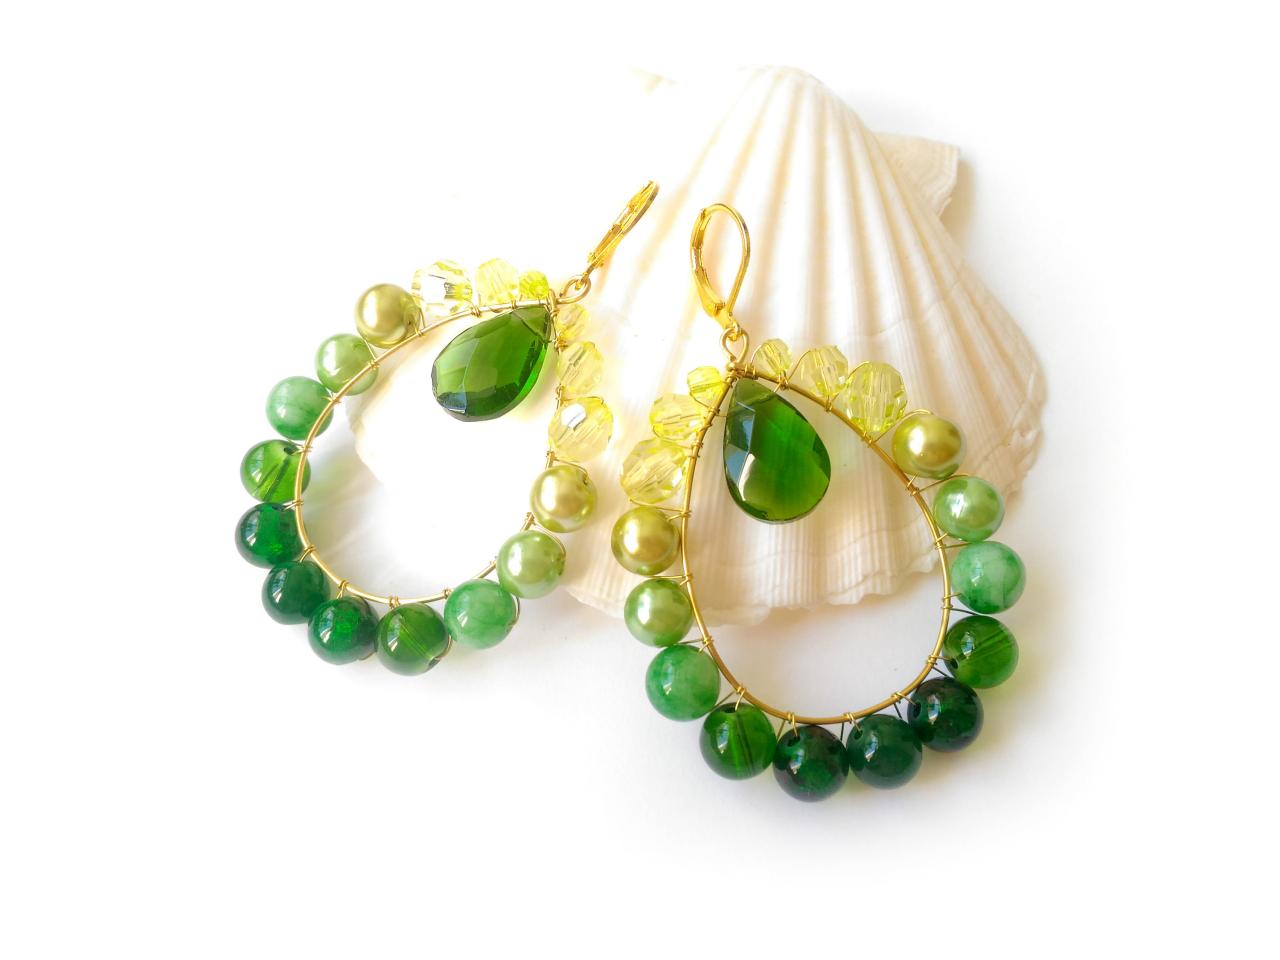 Green Jade Hoop Earrings, Long Green Ombre Earrings, 3 Inch Festival Hoops, Beaded Boho Earrings, Gift For Her, Green And Gold Earrings